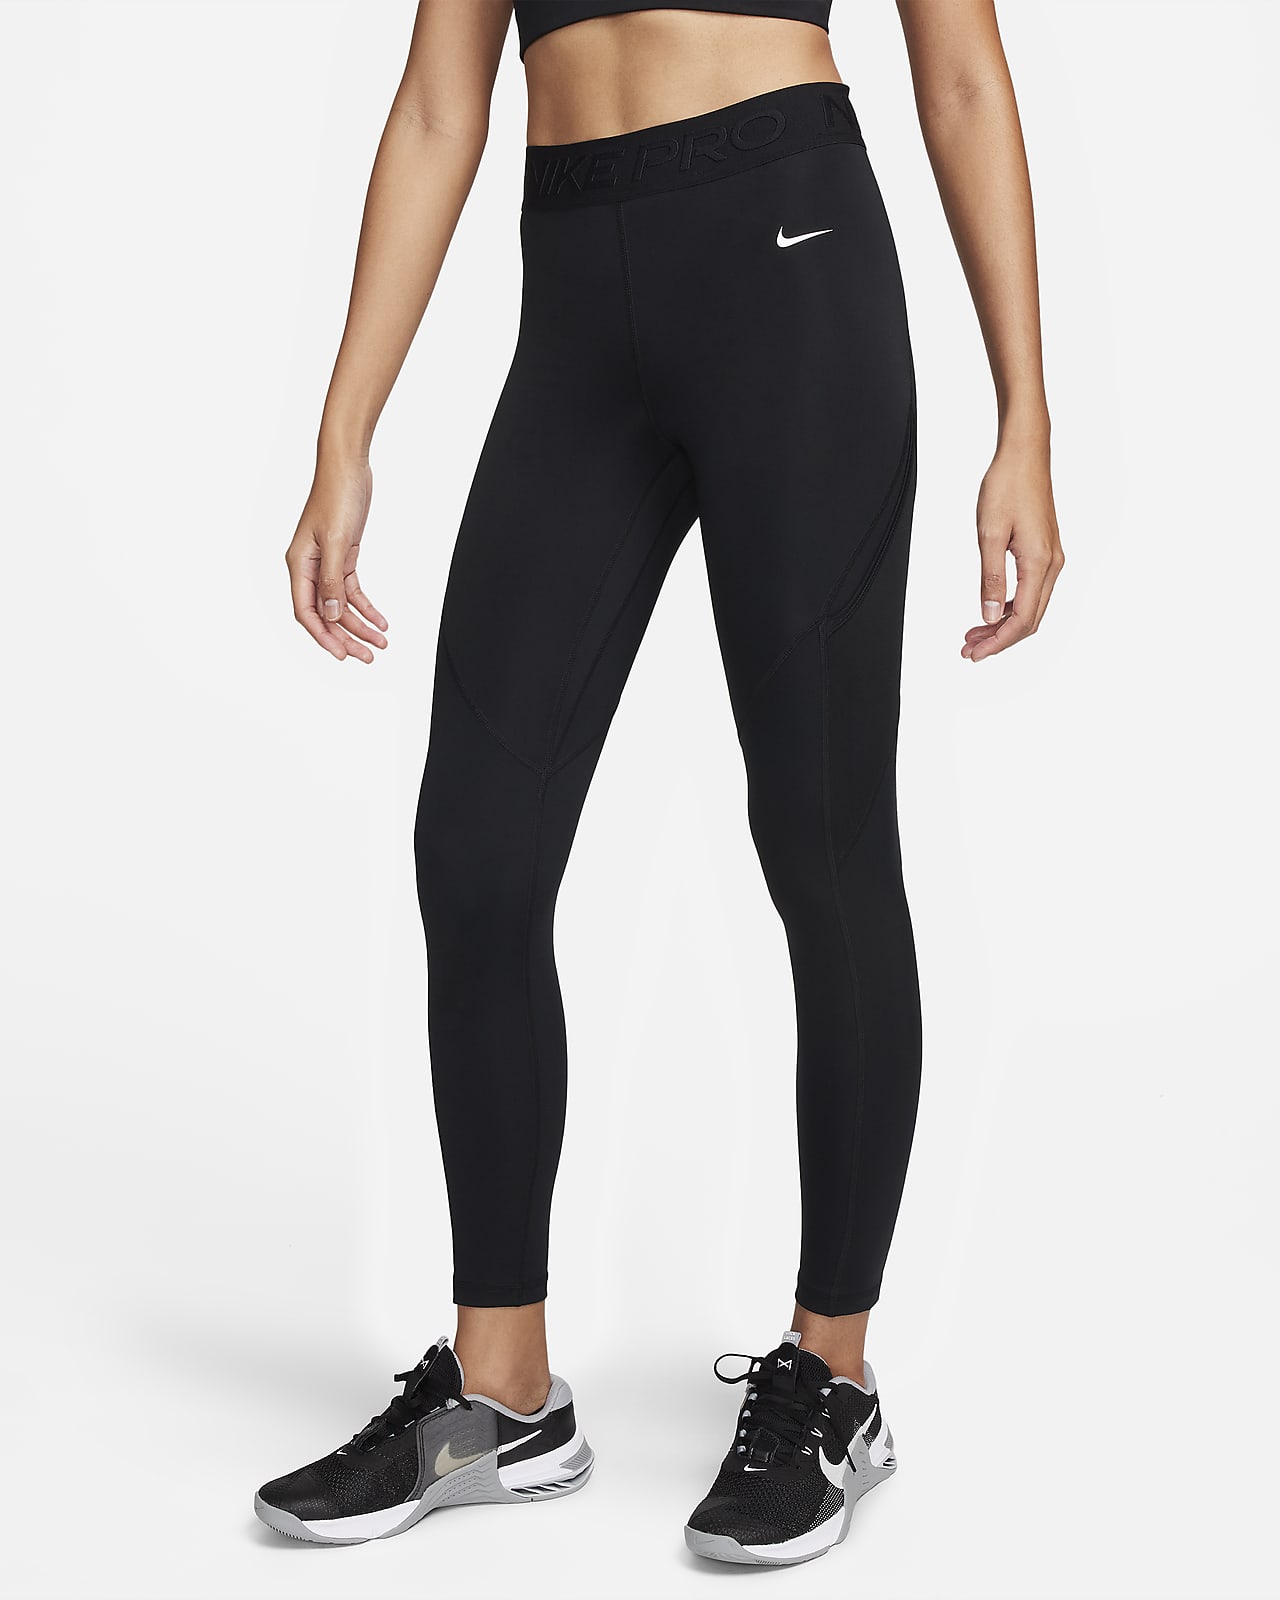 Las mejores ofertas en Tamaño Regular de poliéster Nike Leggings para Mujer